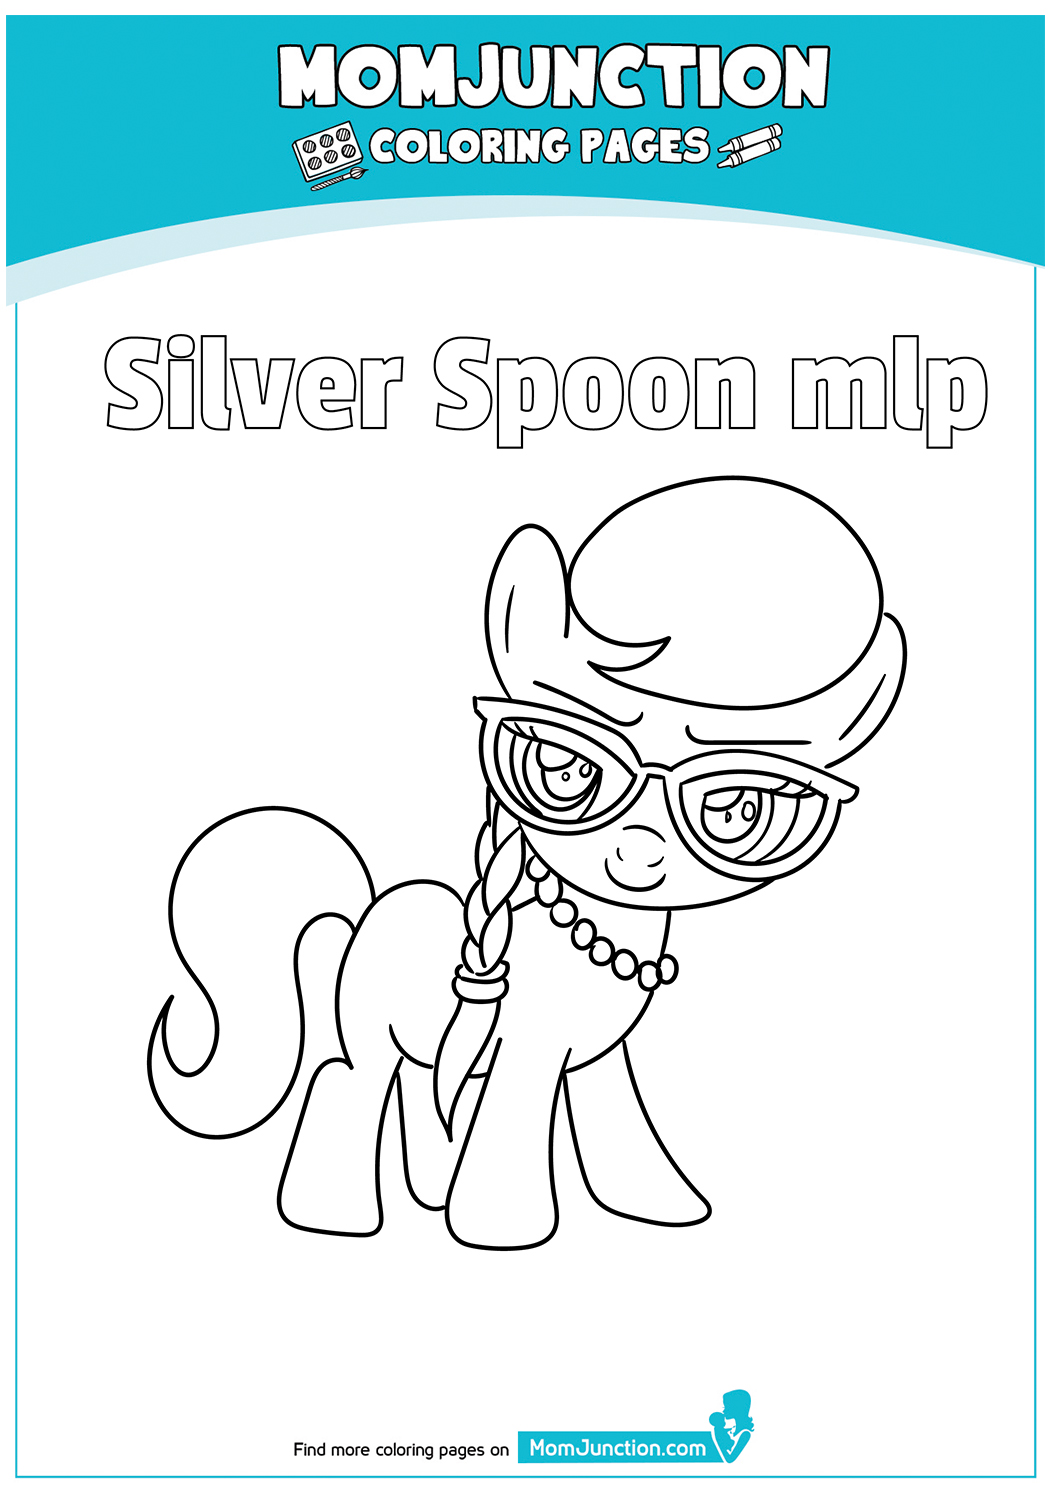 Silver-Spoon-mlp-17